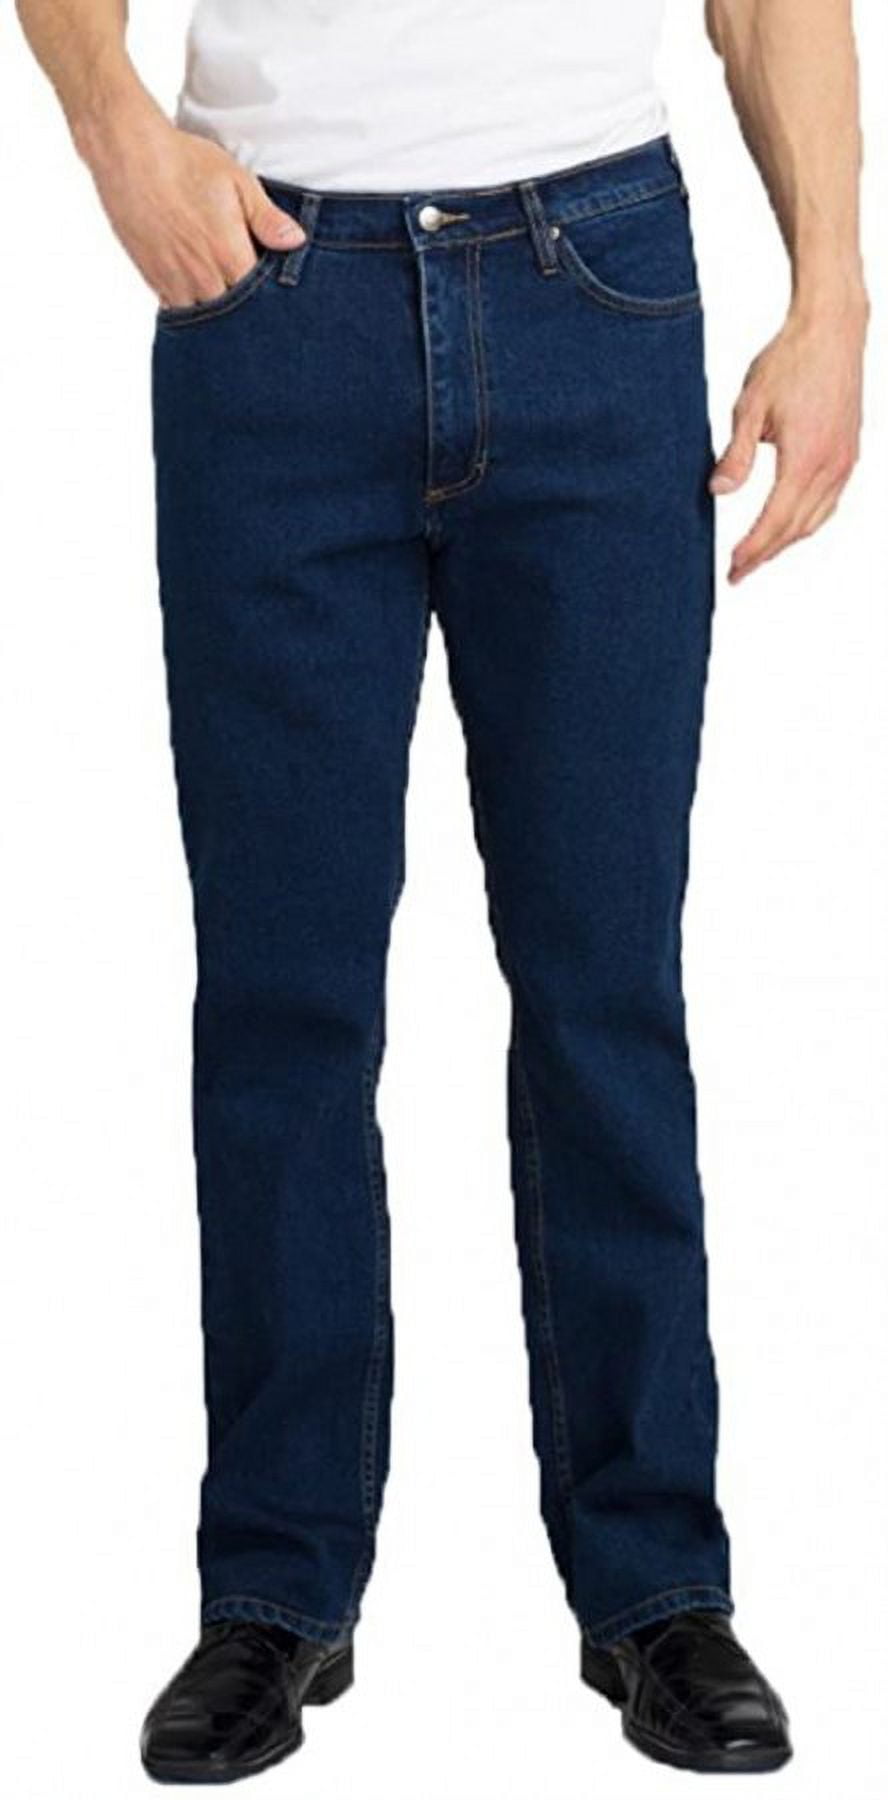 Grand River Men's Big and Tall Stretch Jeans - Walmart.com